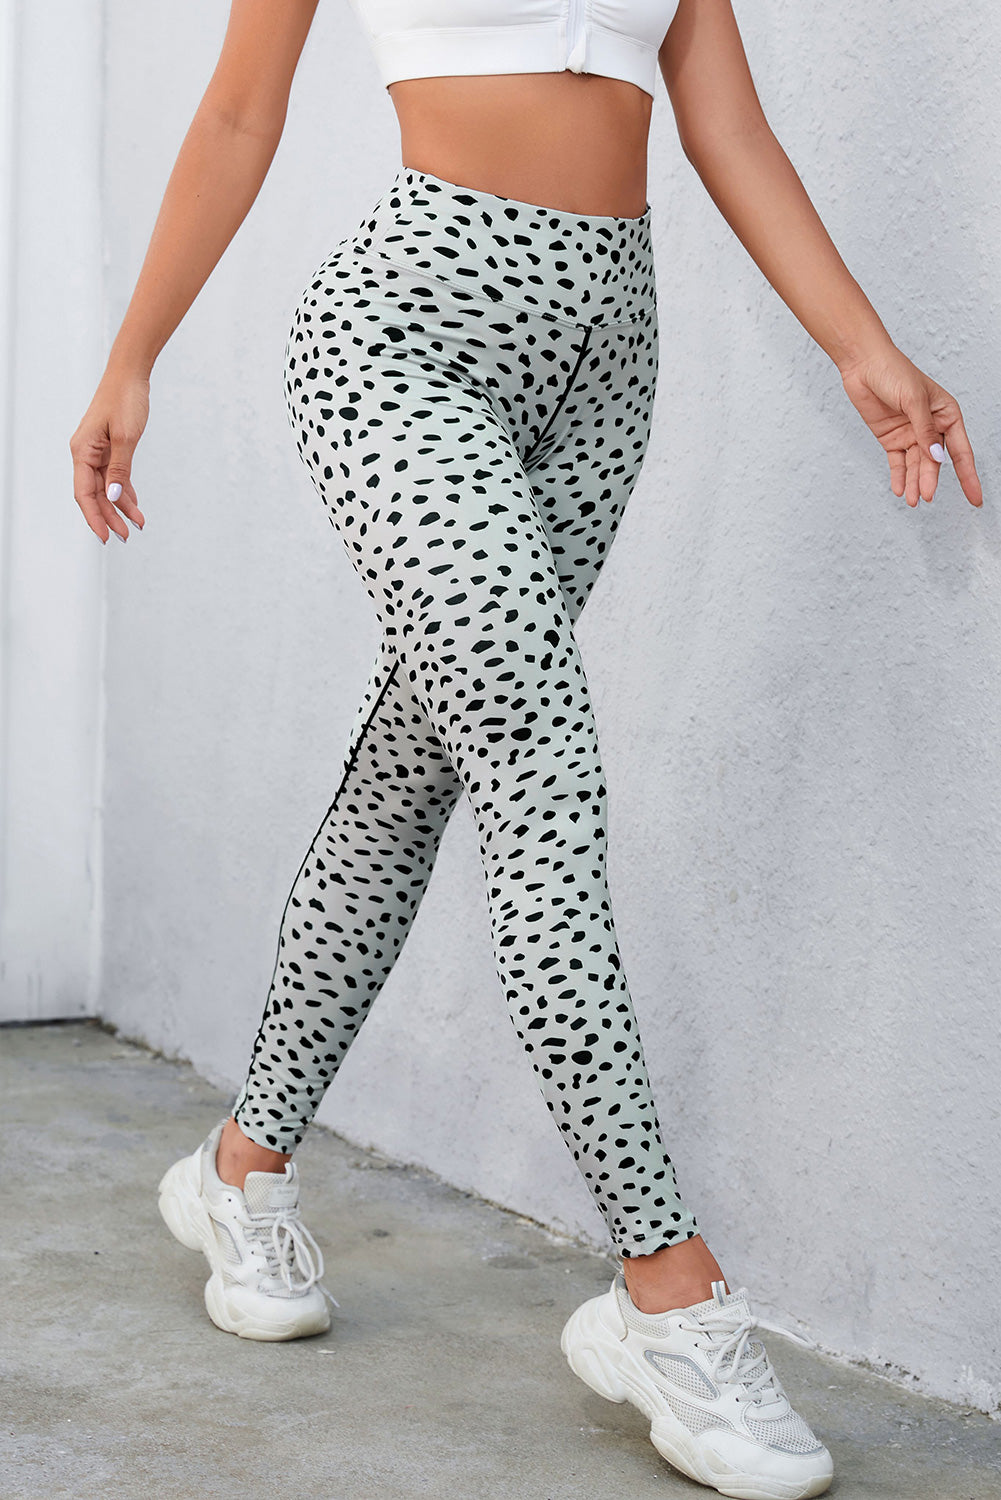 Apricot Dalmatian Spots Printed Stretchy High Waist Leggings